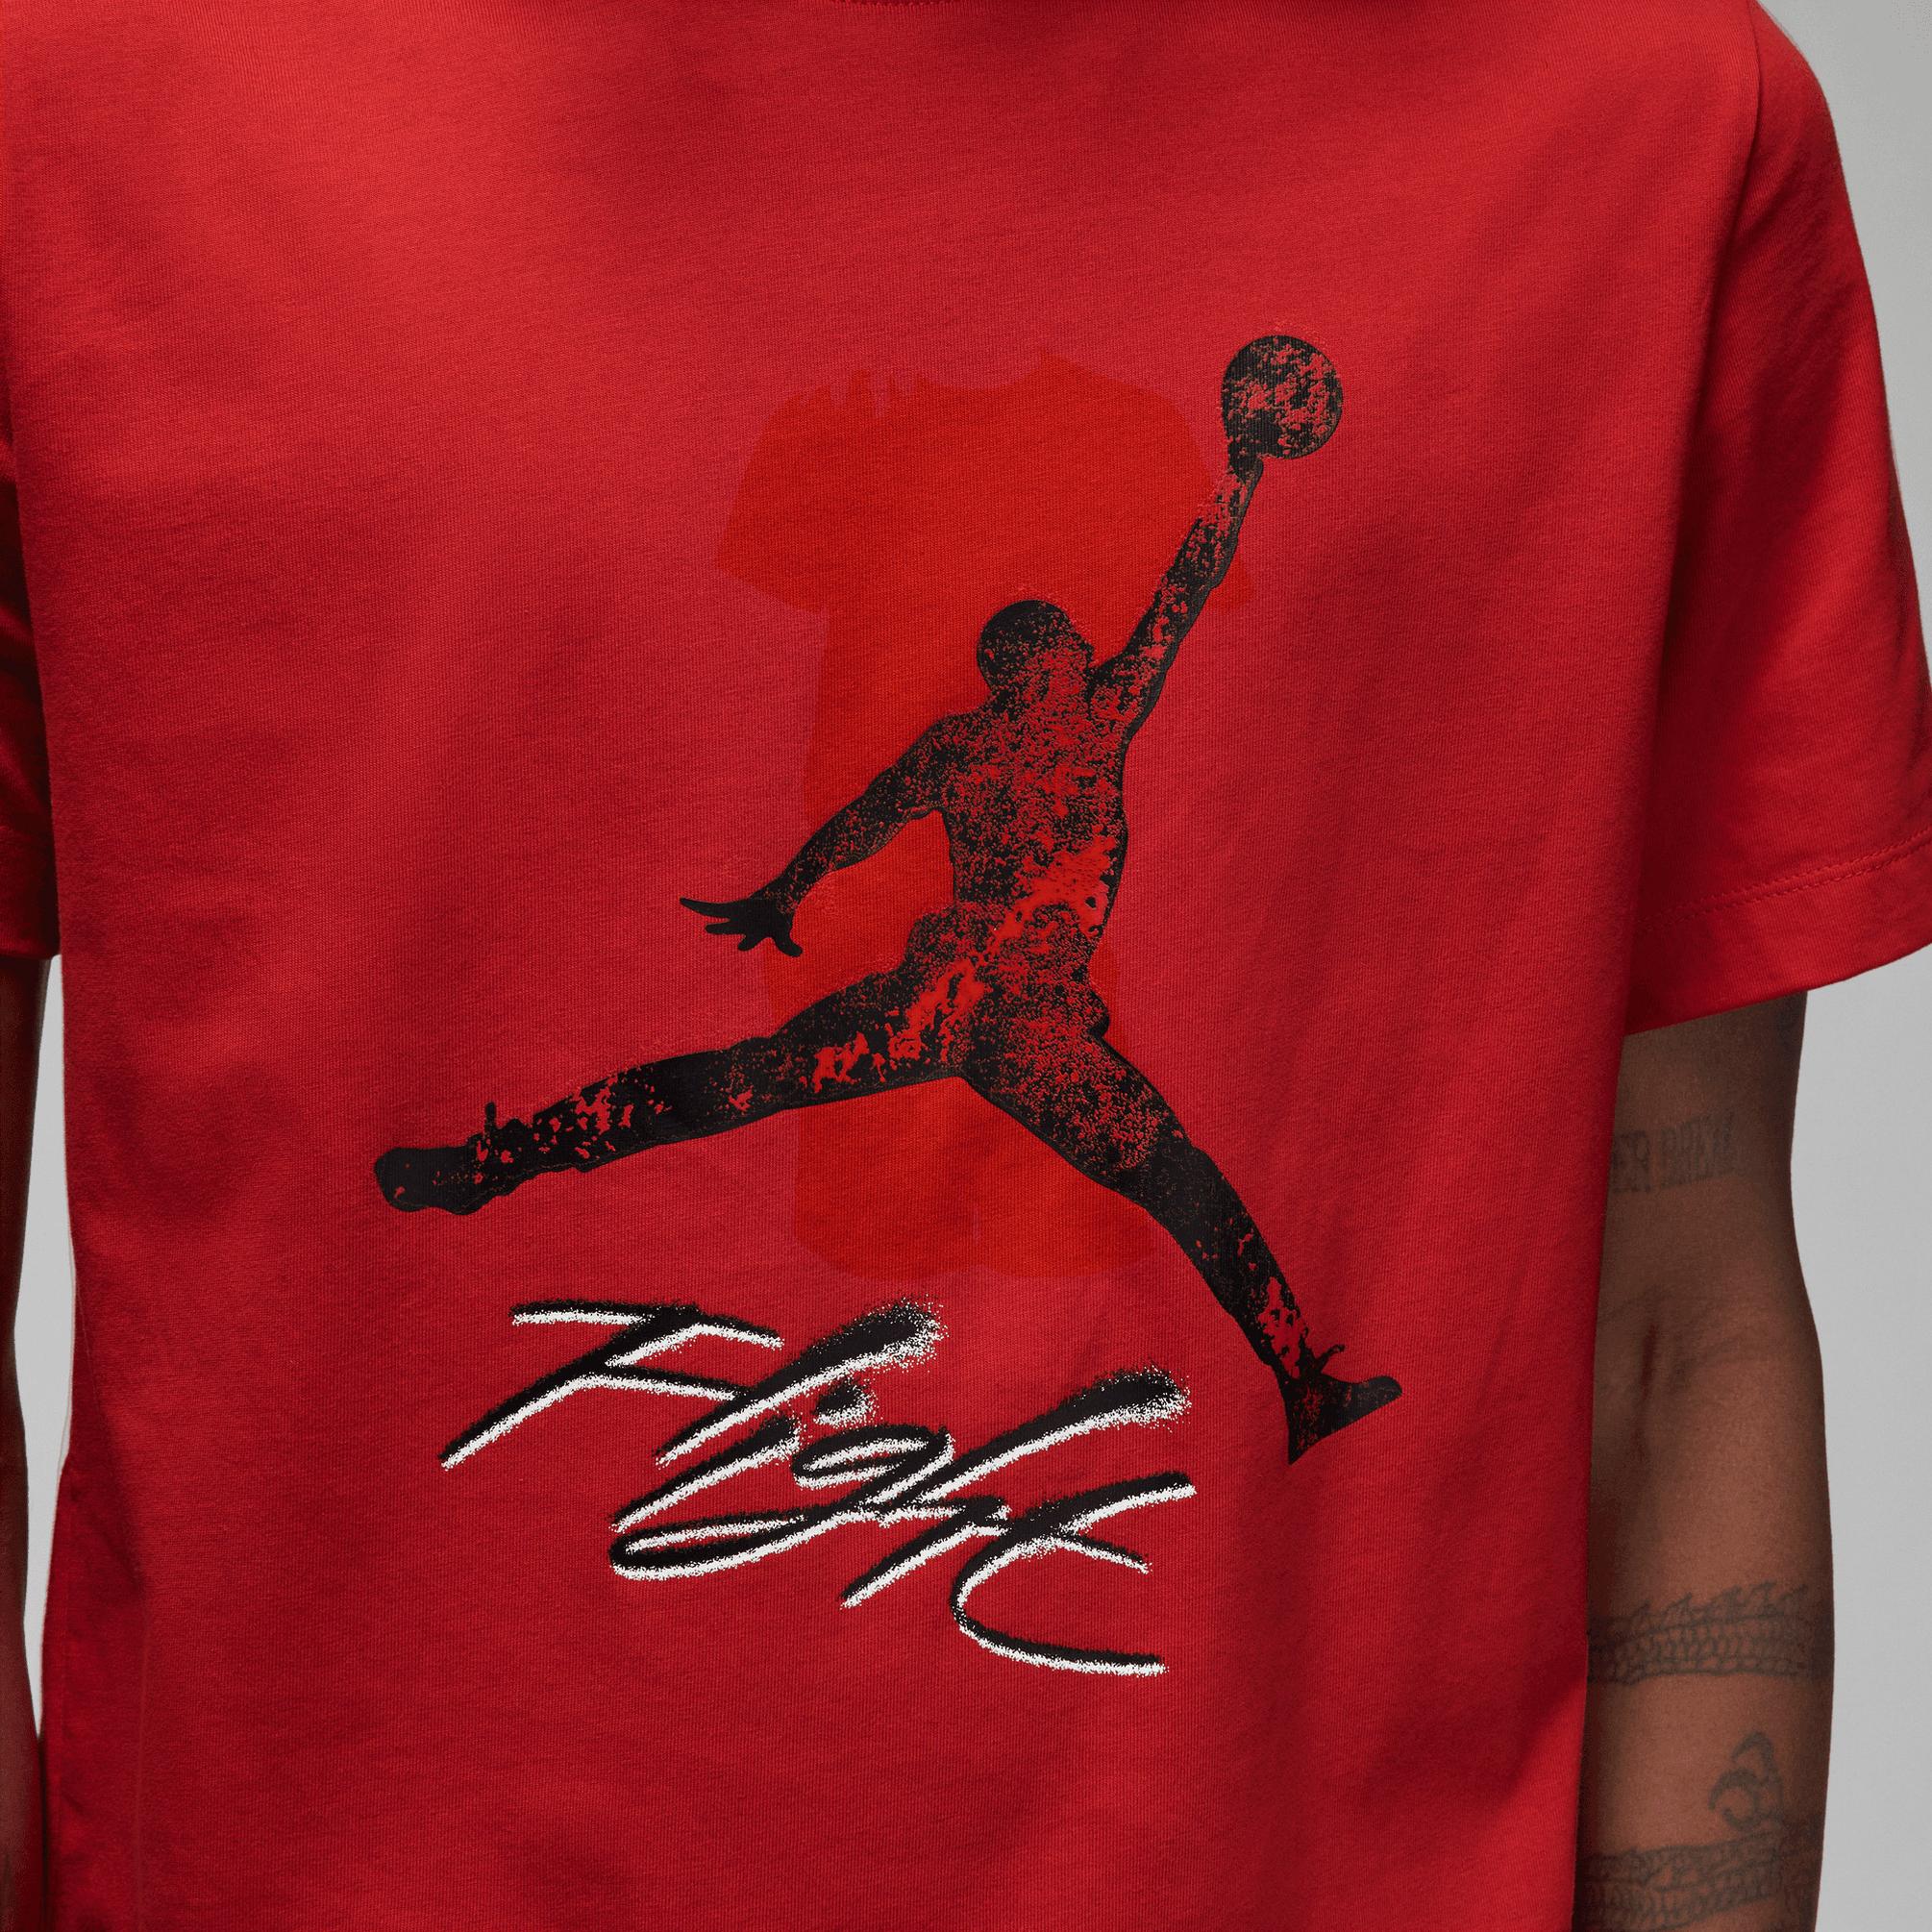  Jordan Essentials Jumpman Erkek Kırmızı T-Shirt